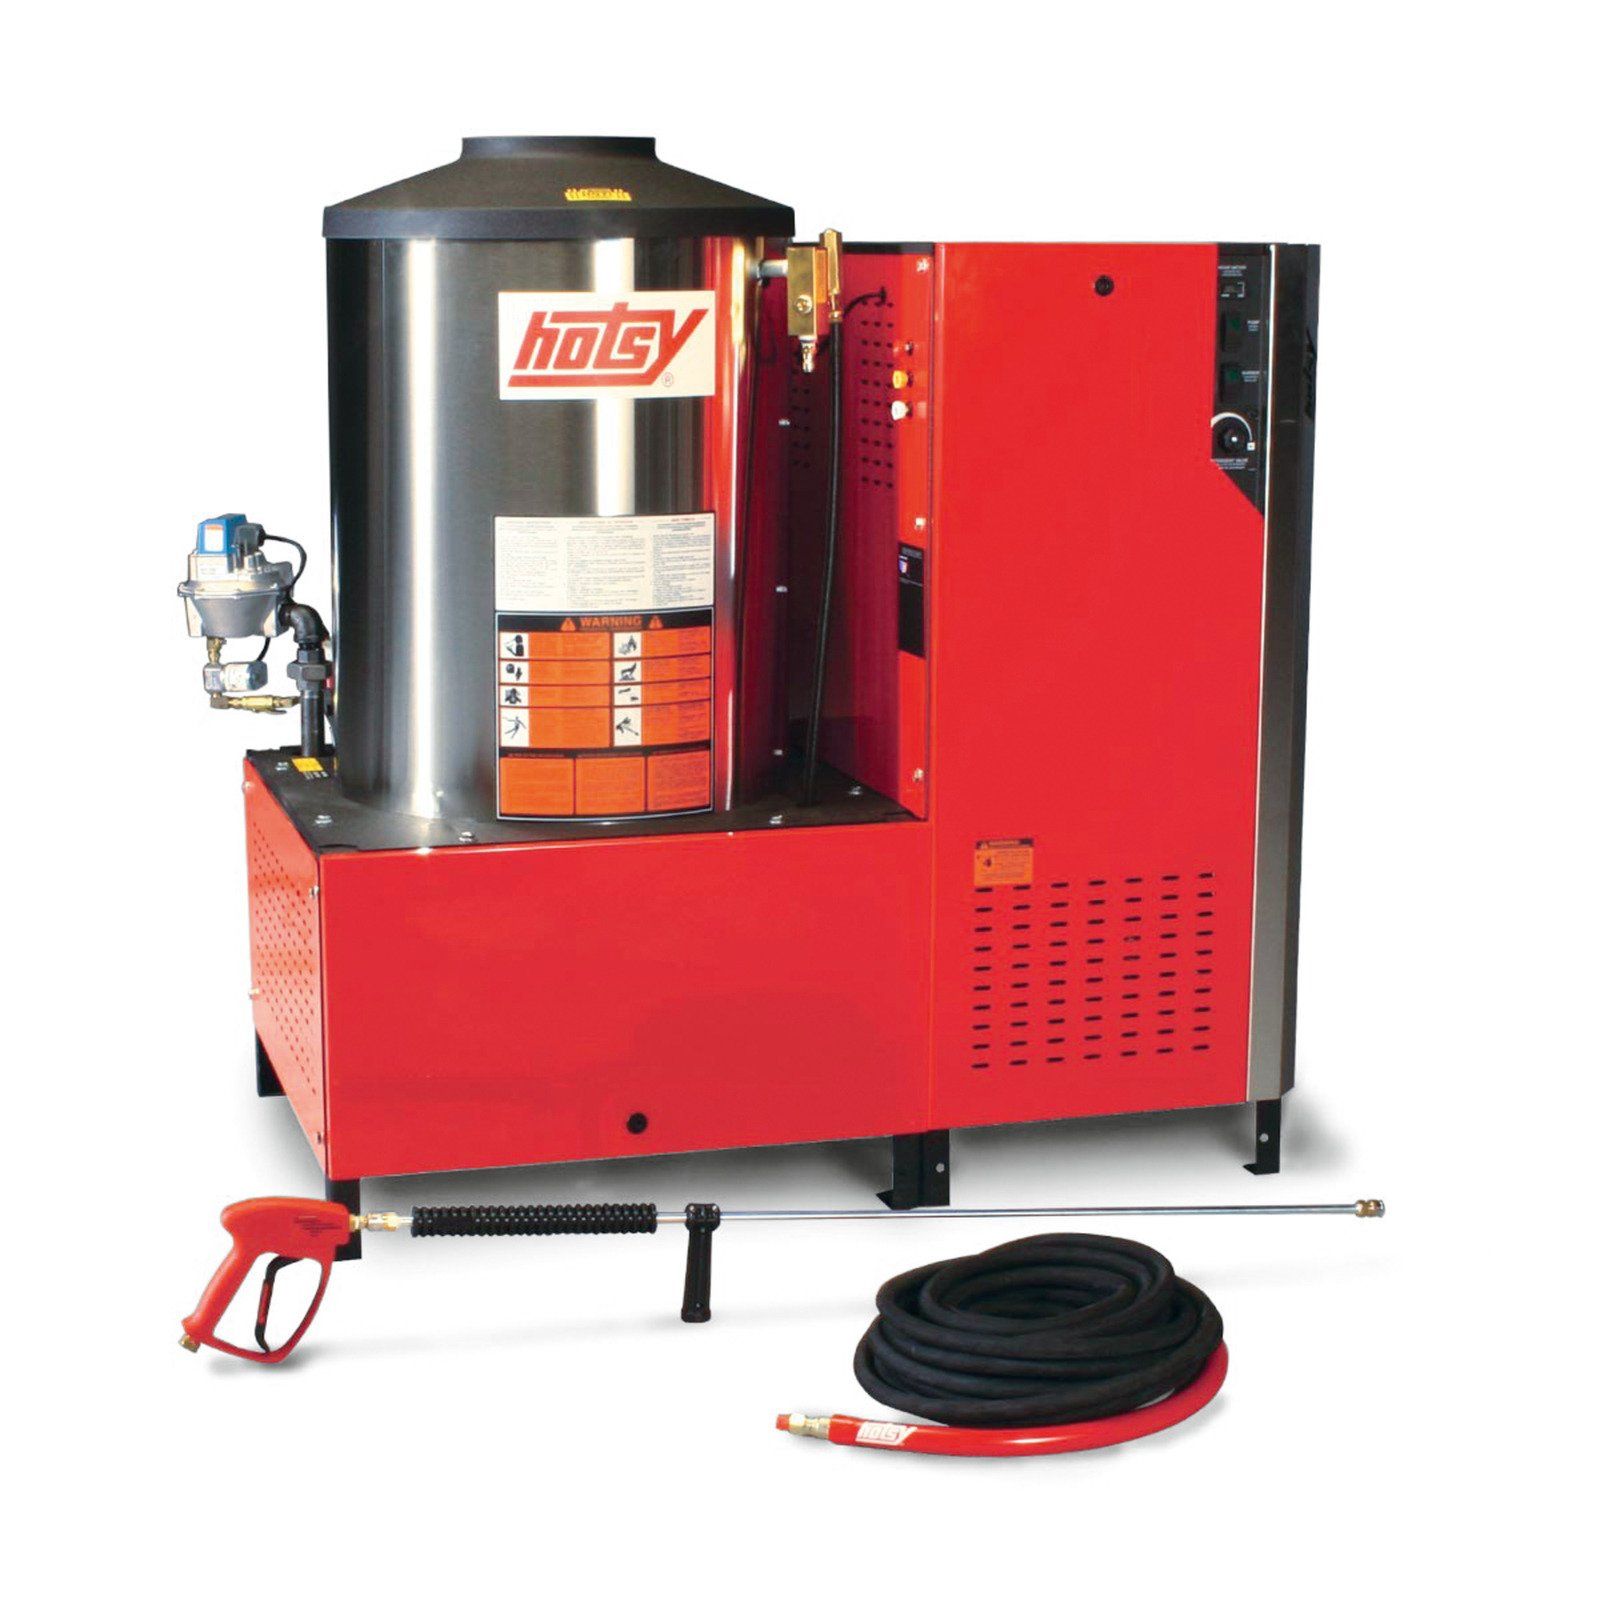 Hotsy 5700 Series- Hot Water Pressure Washer